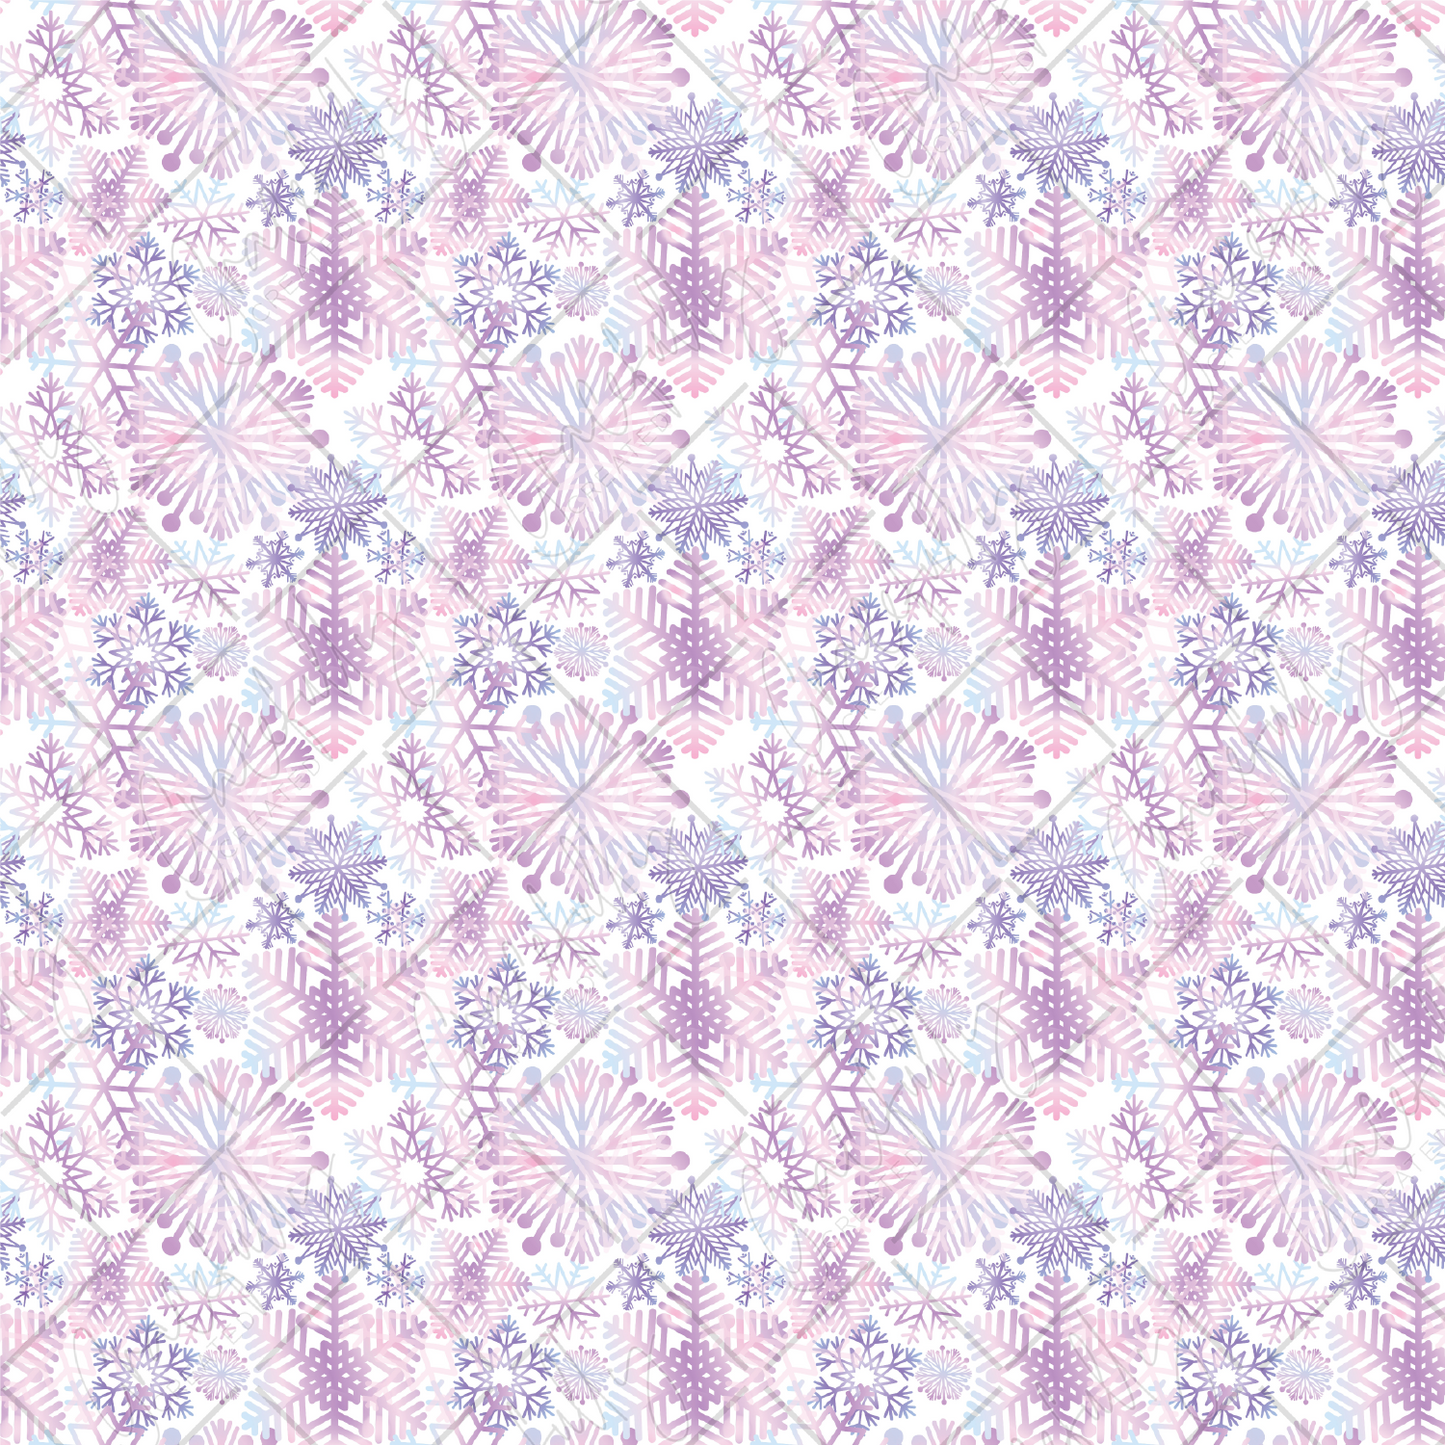 CPV10 Purple Snowflakes